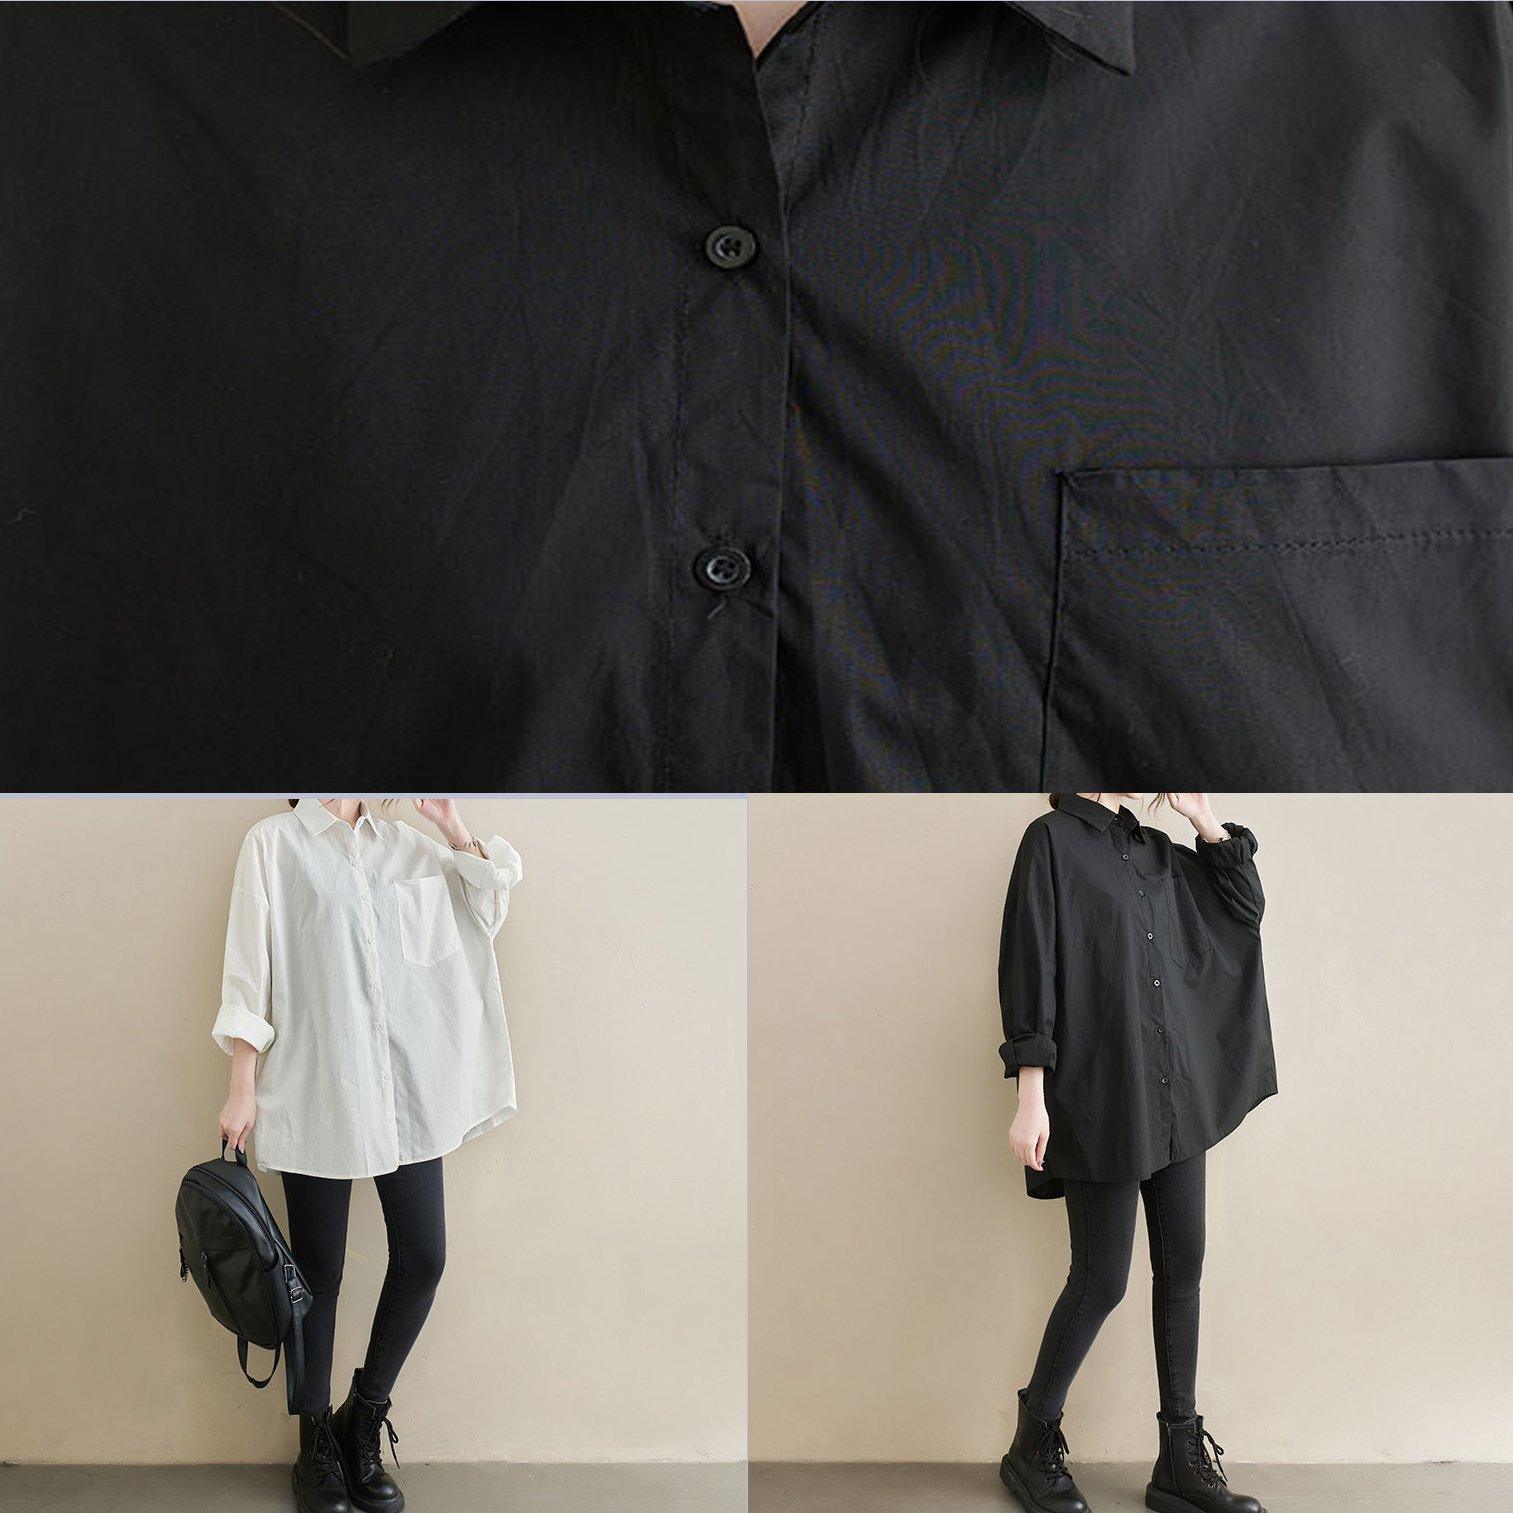 Art Lapel Pockets Spring Tunic Top Shirts Black Top - Omychic